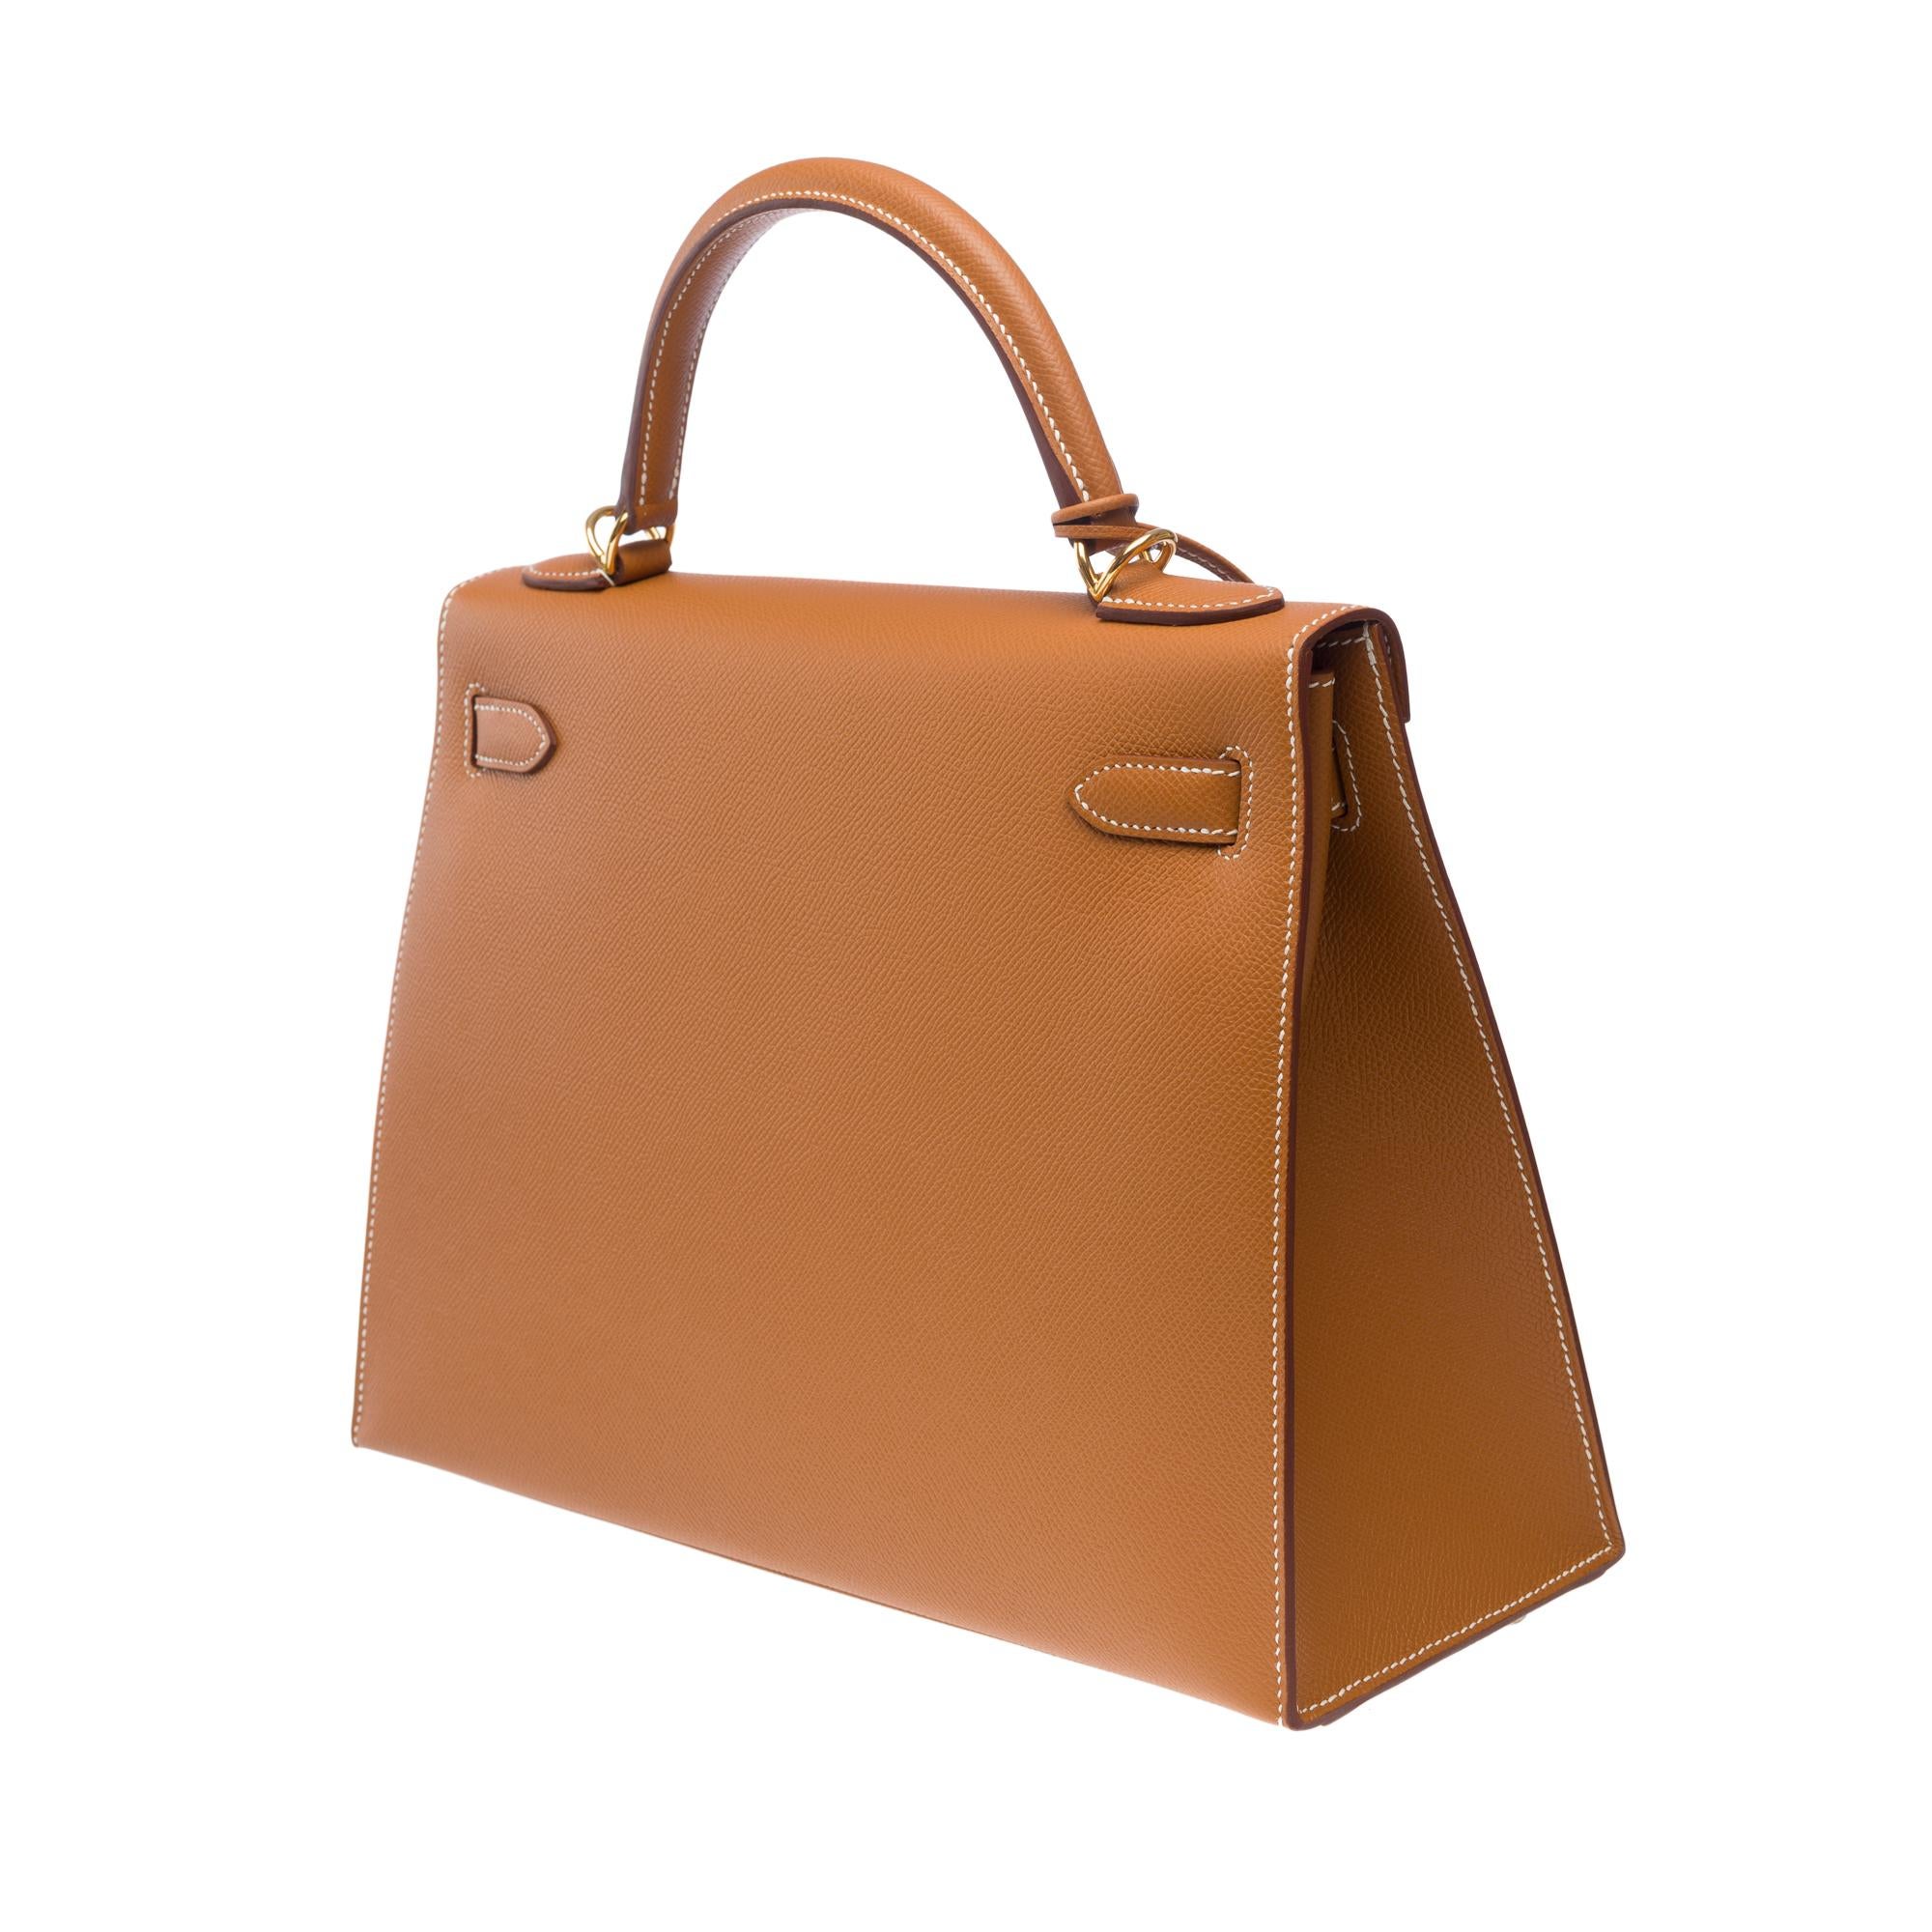 New Hermès Kelly 32 sellier handbag strap in Camel Epsom calf leather, GHW For Sale 2